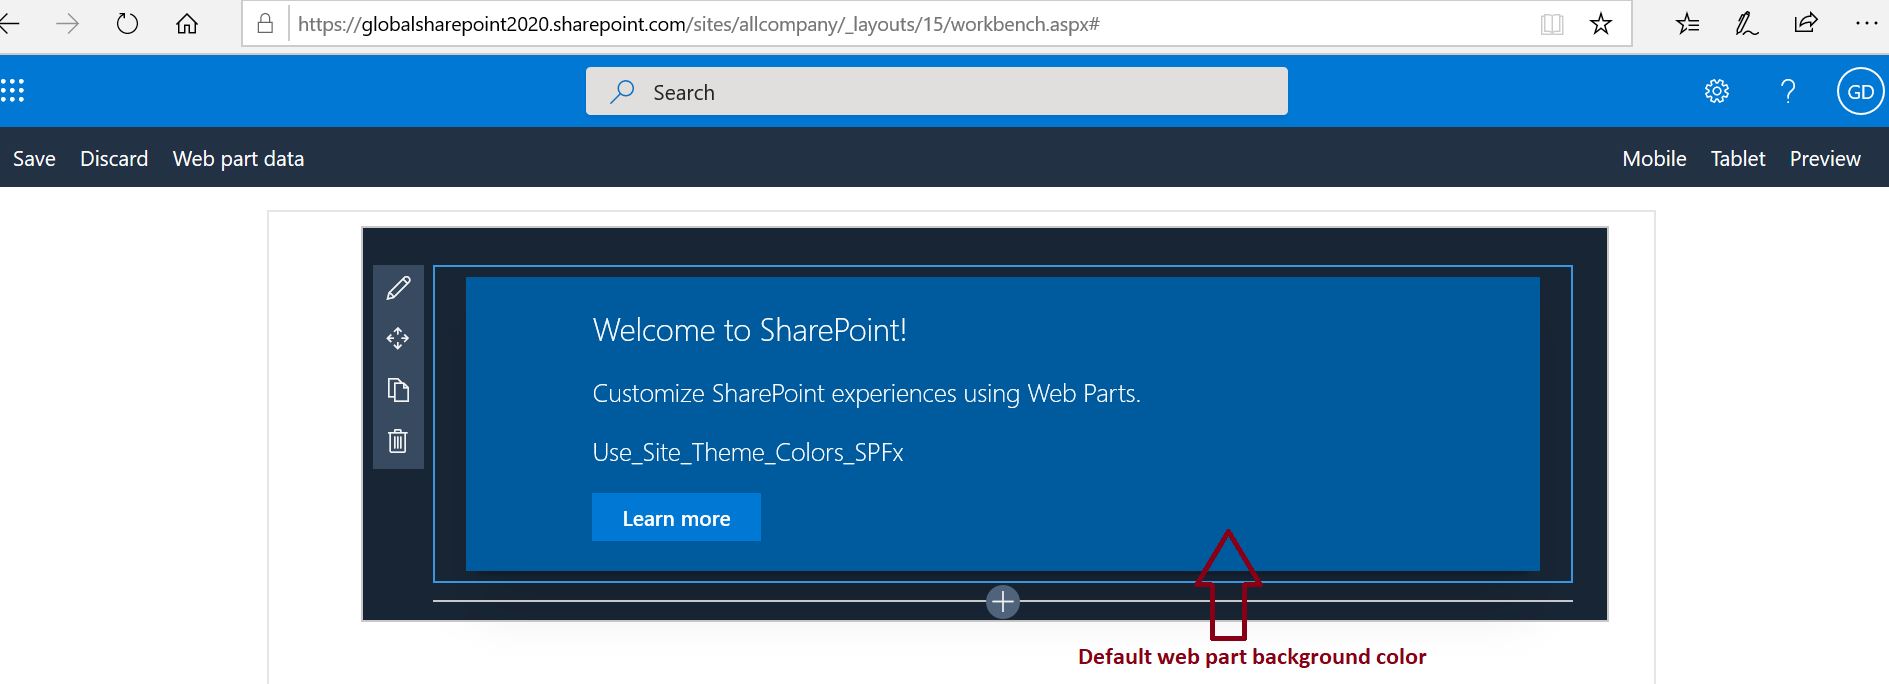 SharePoint theme colors (SPFx theme colors), launch SPFx web part in SharePoint Online workbench - Default web part background color